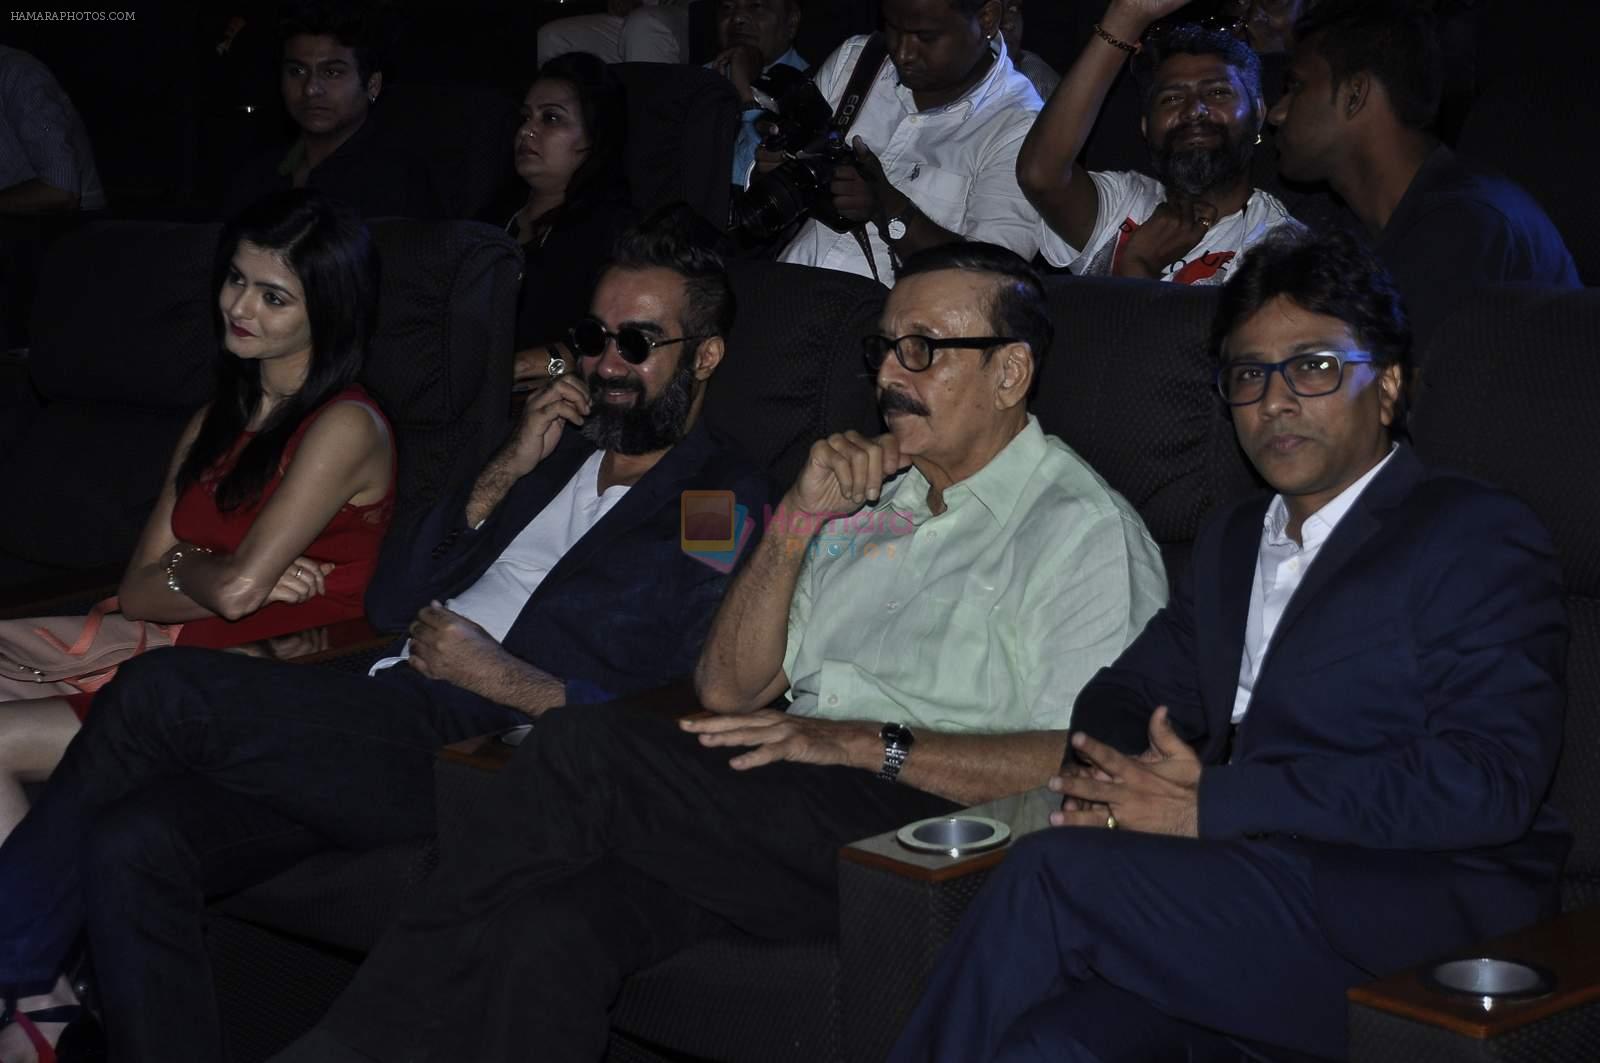 Ranvir Shorey film launch in Mumbai on 2nd Dec 2015